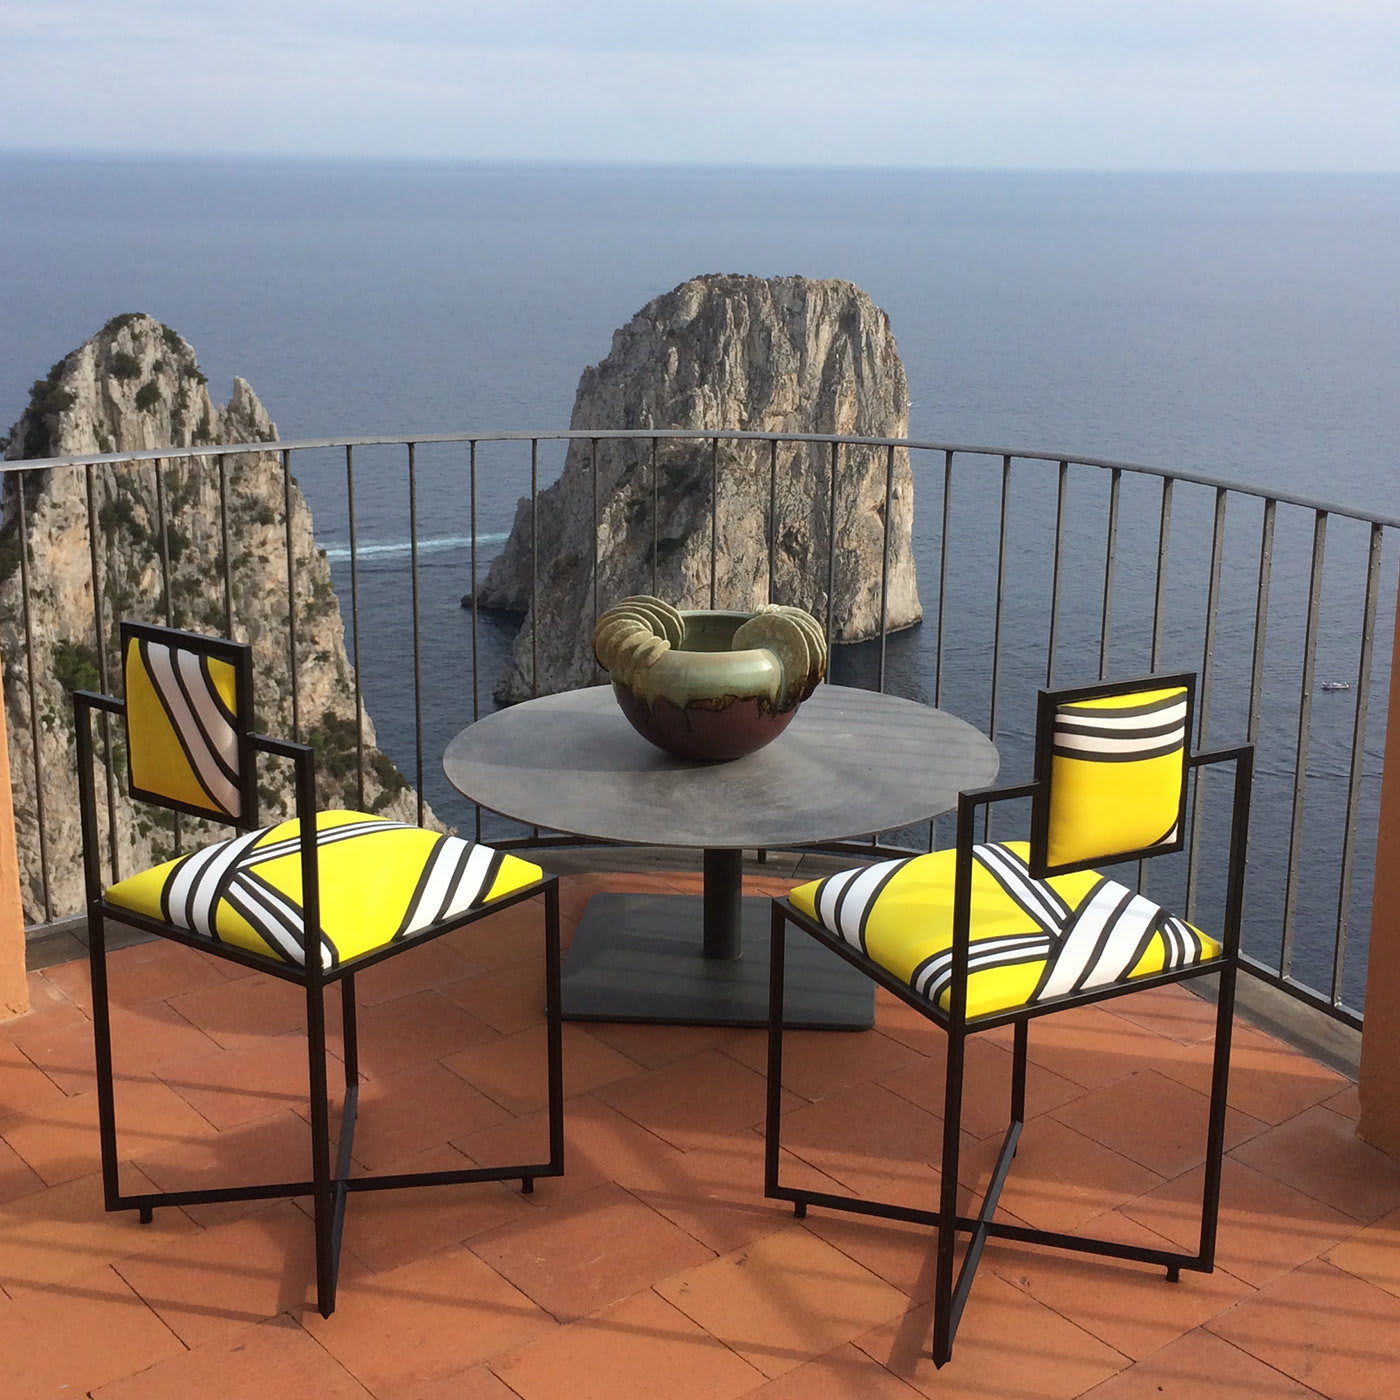 Capri Tria Giallo Iron Chair - Francesco Della Femina